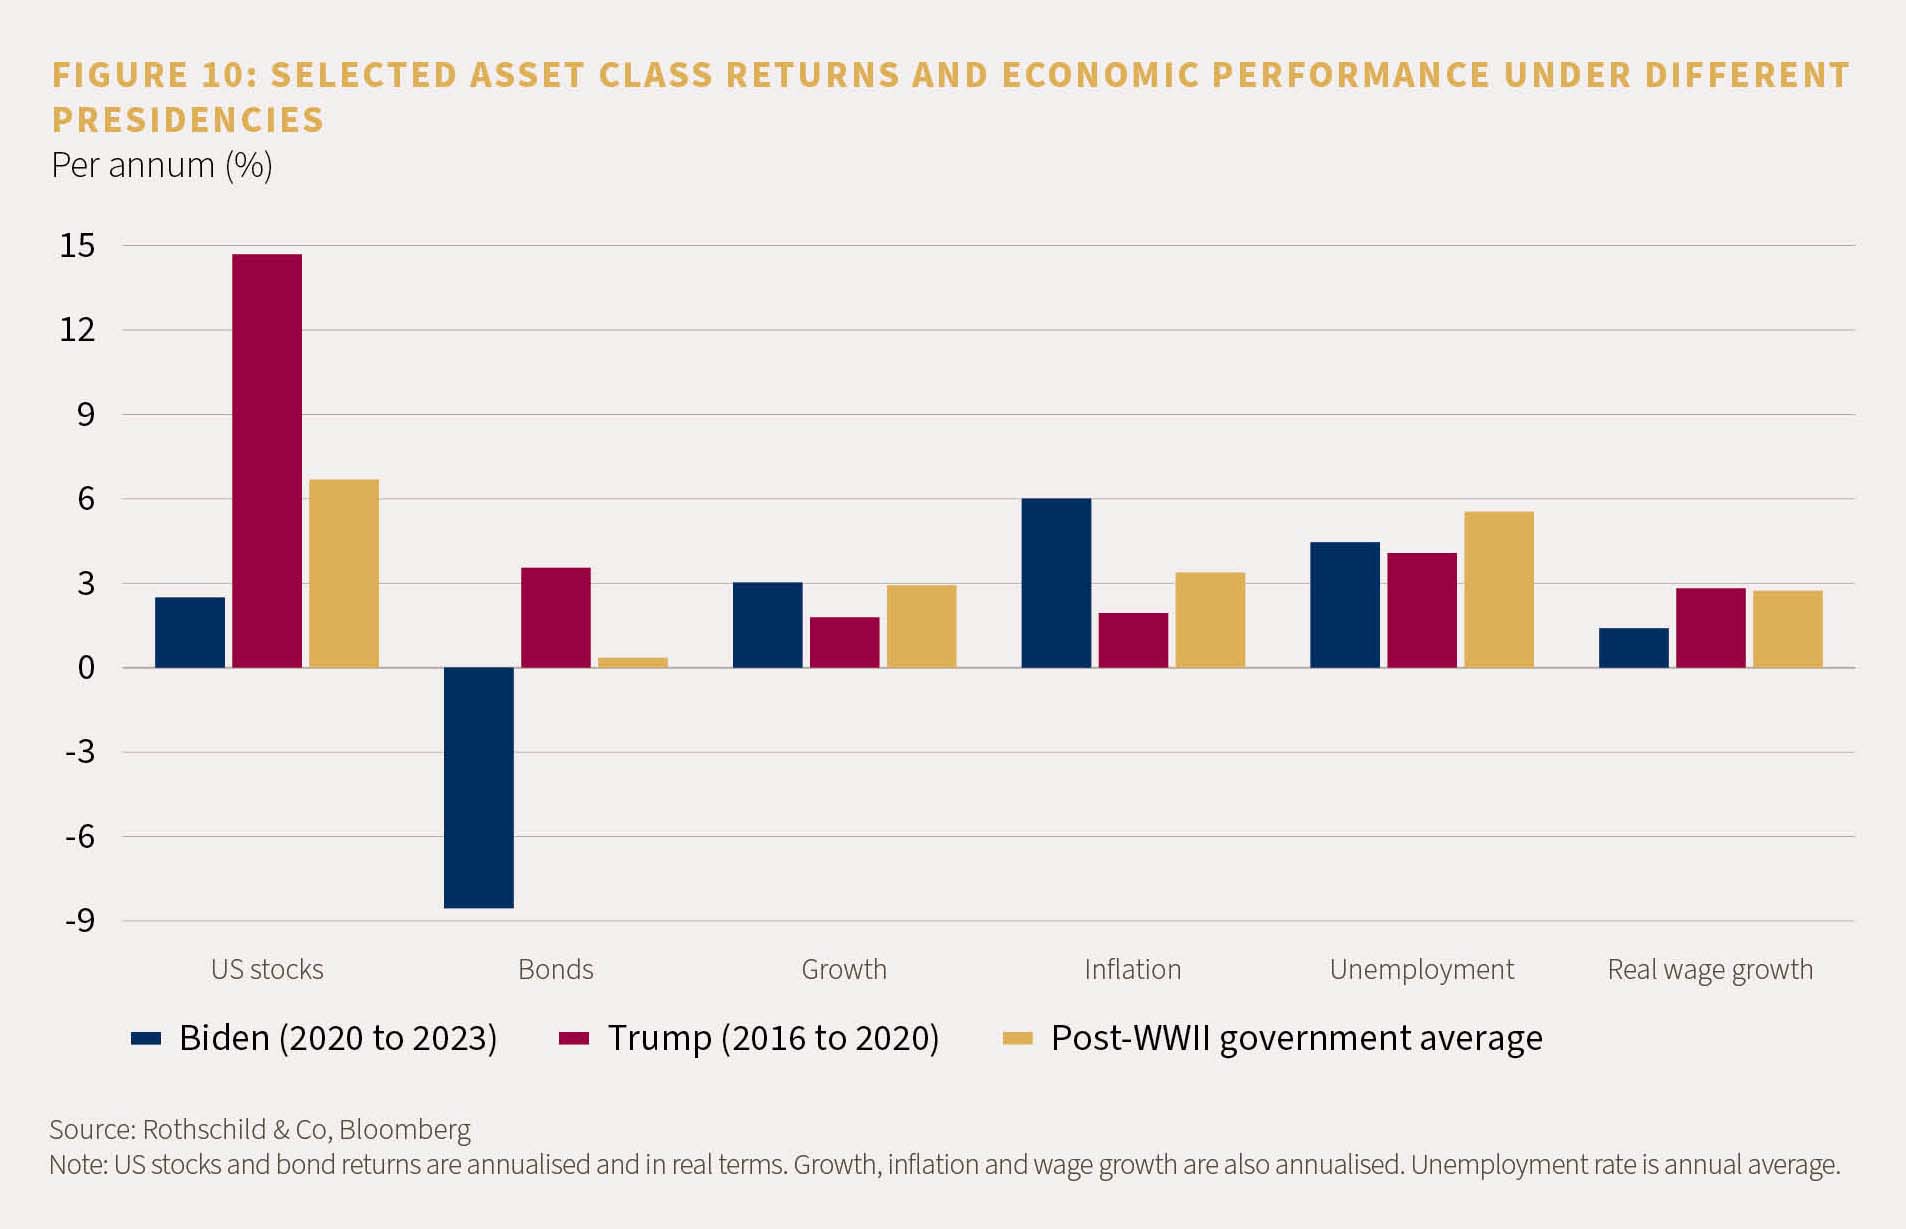 Figure 10 shows selected asset class returns and economic performances under different presidencies.